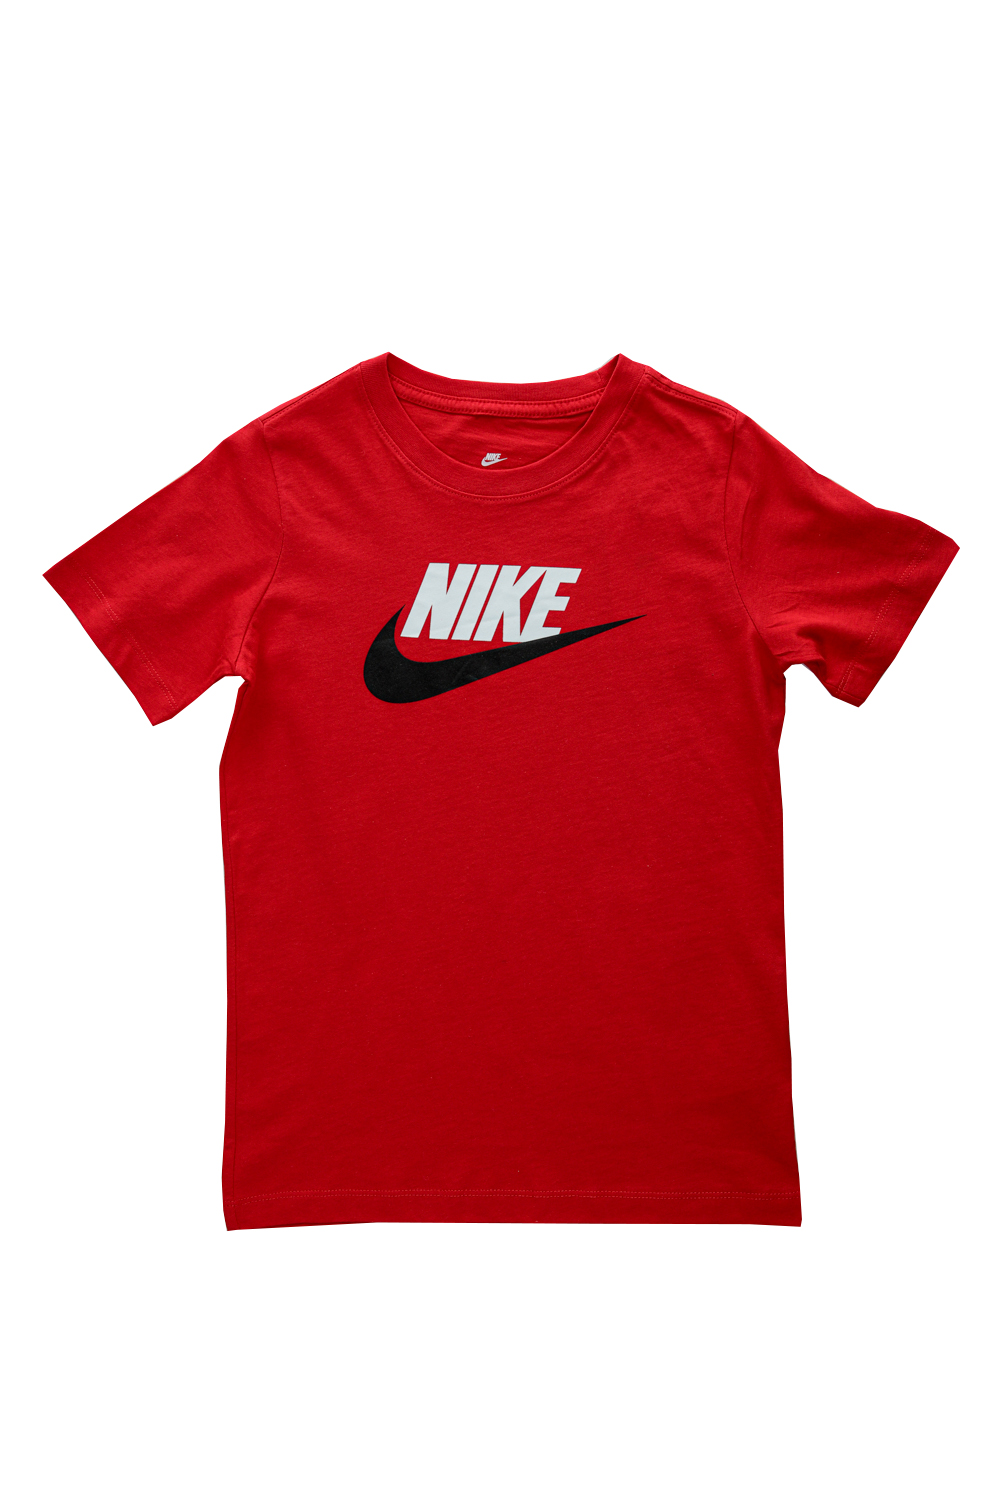 NIKE – Παιδικο T-Shirt ΝΙΚΕ TEE FUTURA ICON κοντομανικο κοοκινο